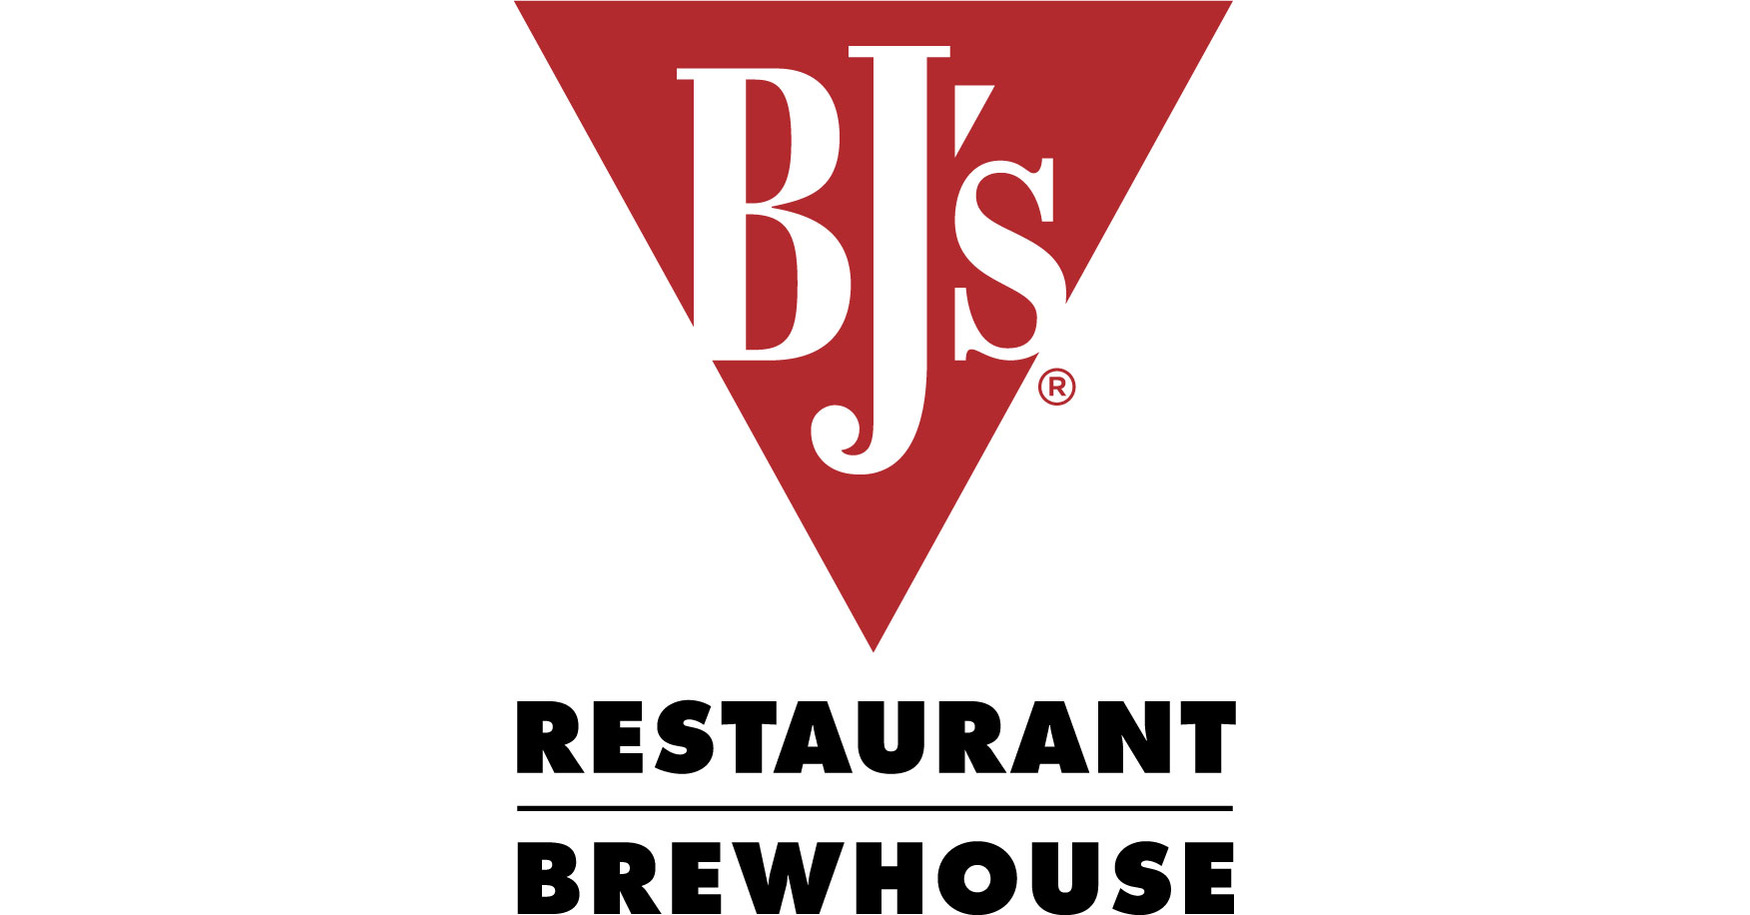 BJ's Restaurants & Brewhouse